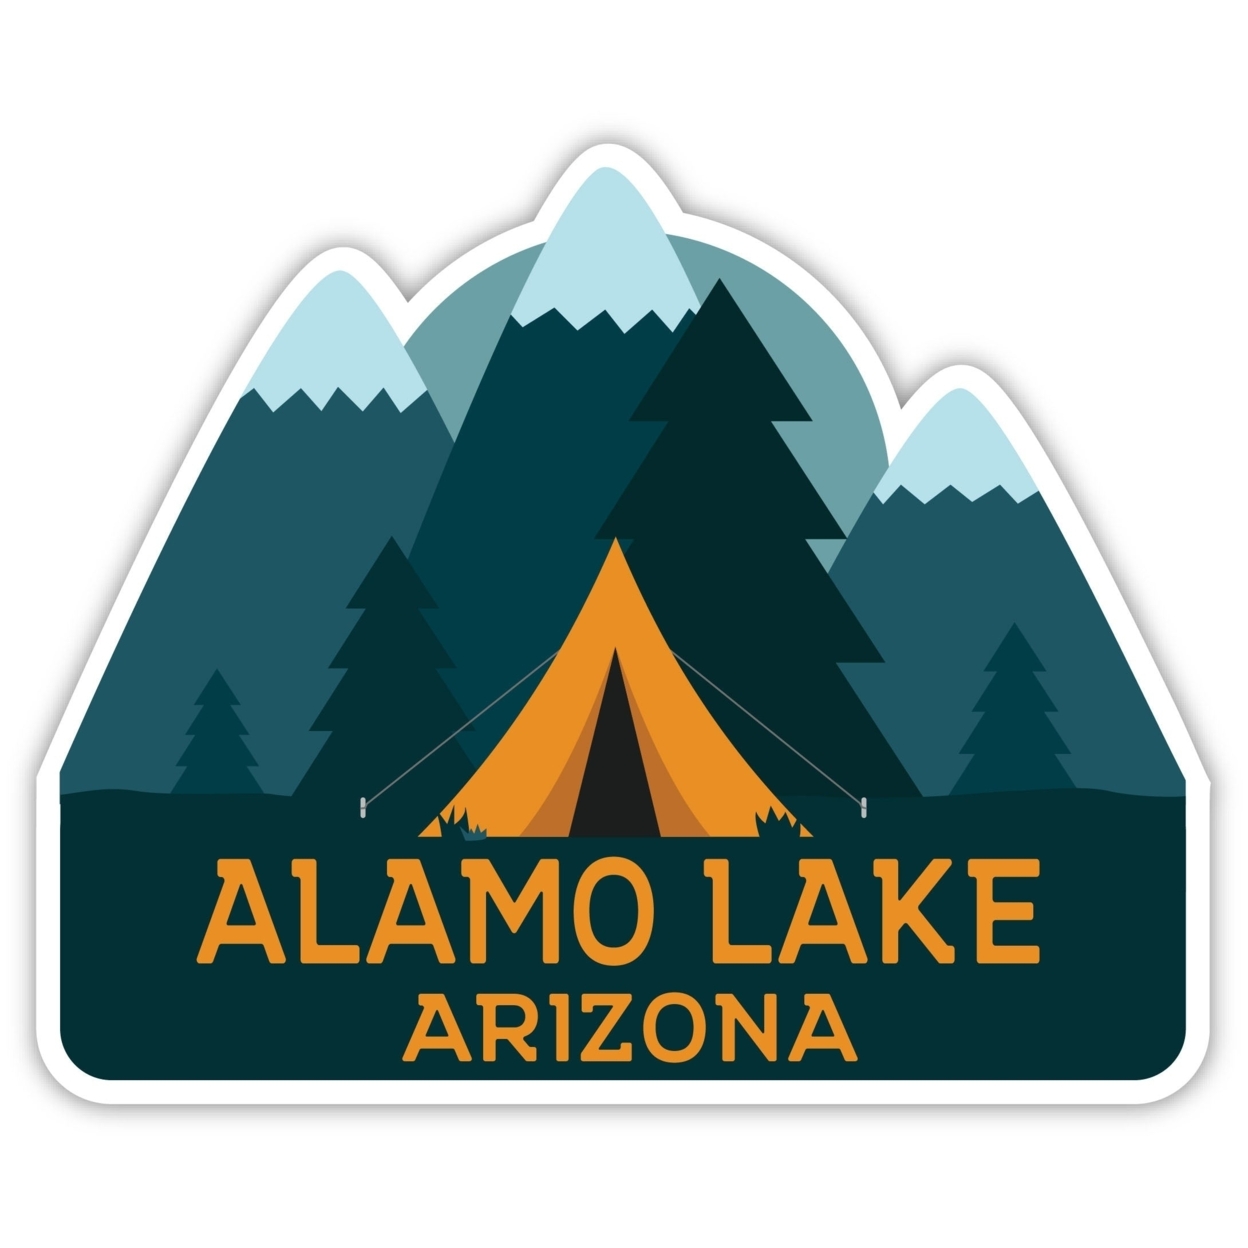 Alamo Lake Arizona Souvenir Decorative Stickers (Choose Theme And Size) - 4-Pack, 2-Inch, Tent